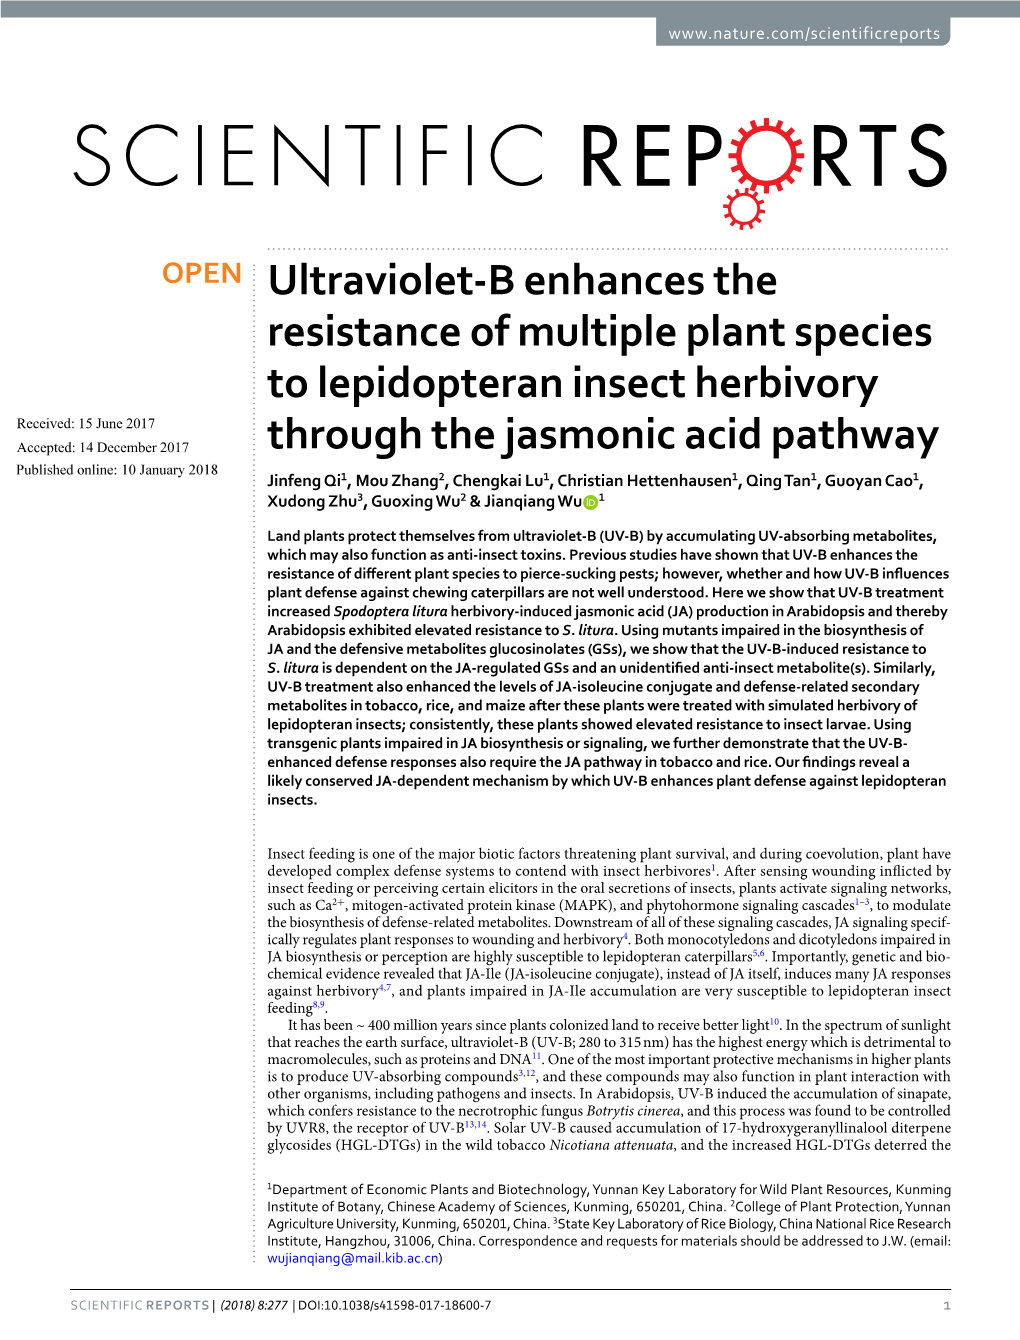 Ultraviolet-B Enhances the Resistance of Multiple Plant Species To